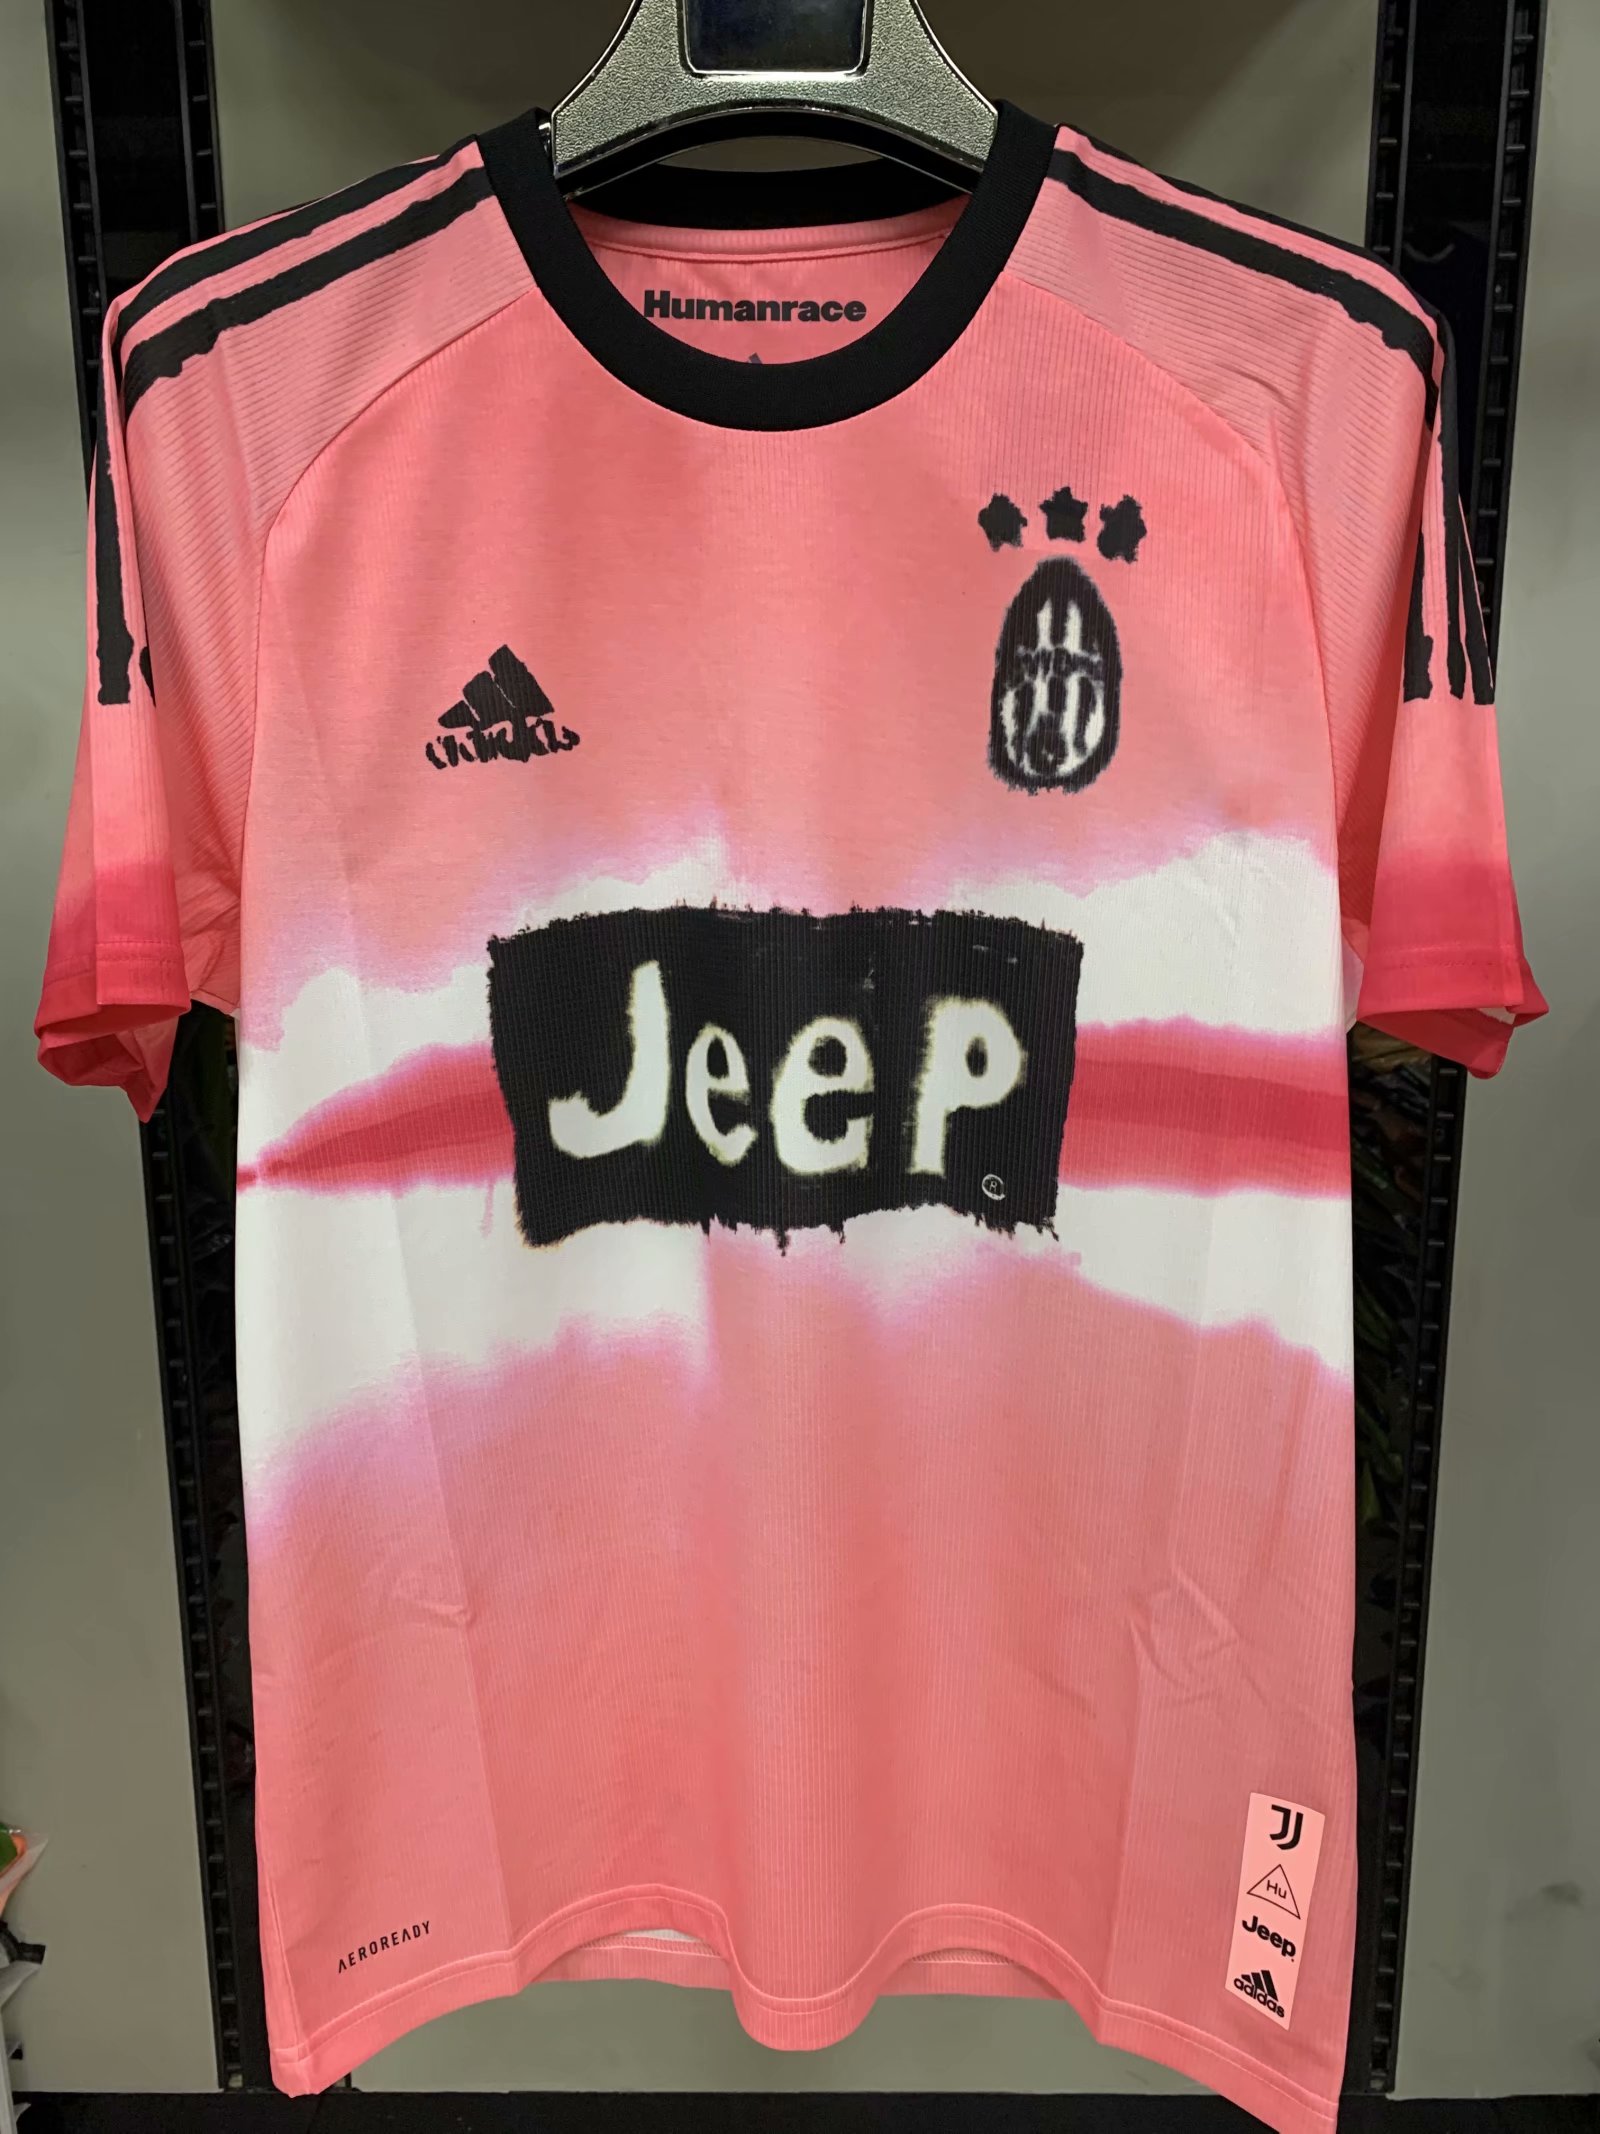 Juventus Jerseys co branded special adult soccer shirt 2020-2021 season